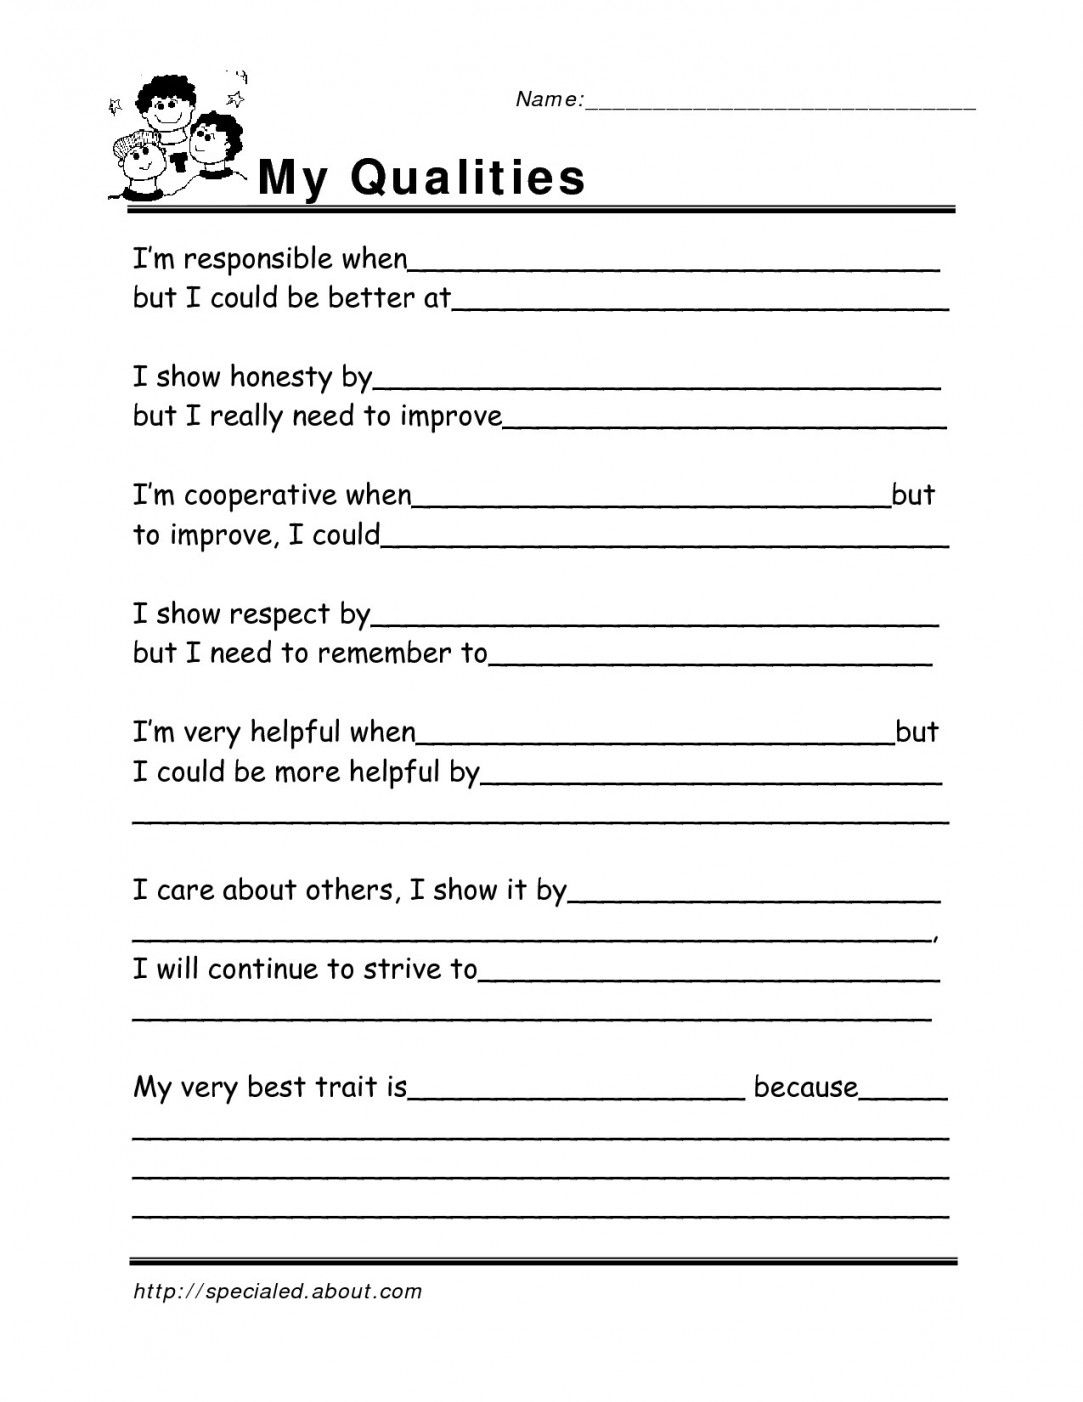 Free Printable Coping Skills Worksheets | Lostranquillos - Free Printable Coping Skills Worksheets